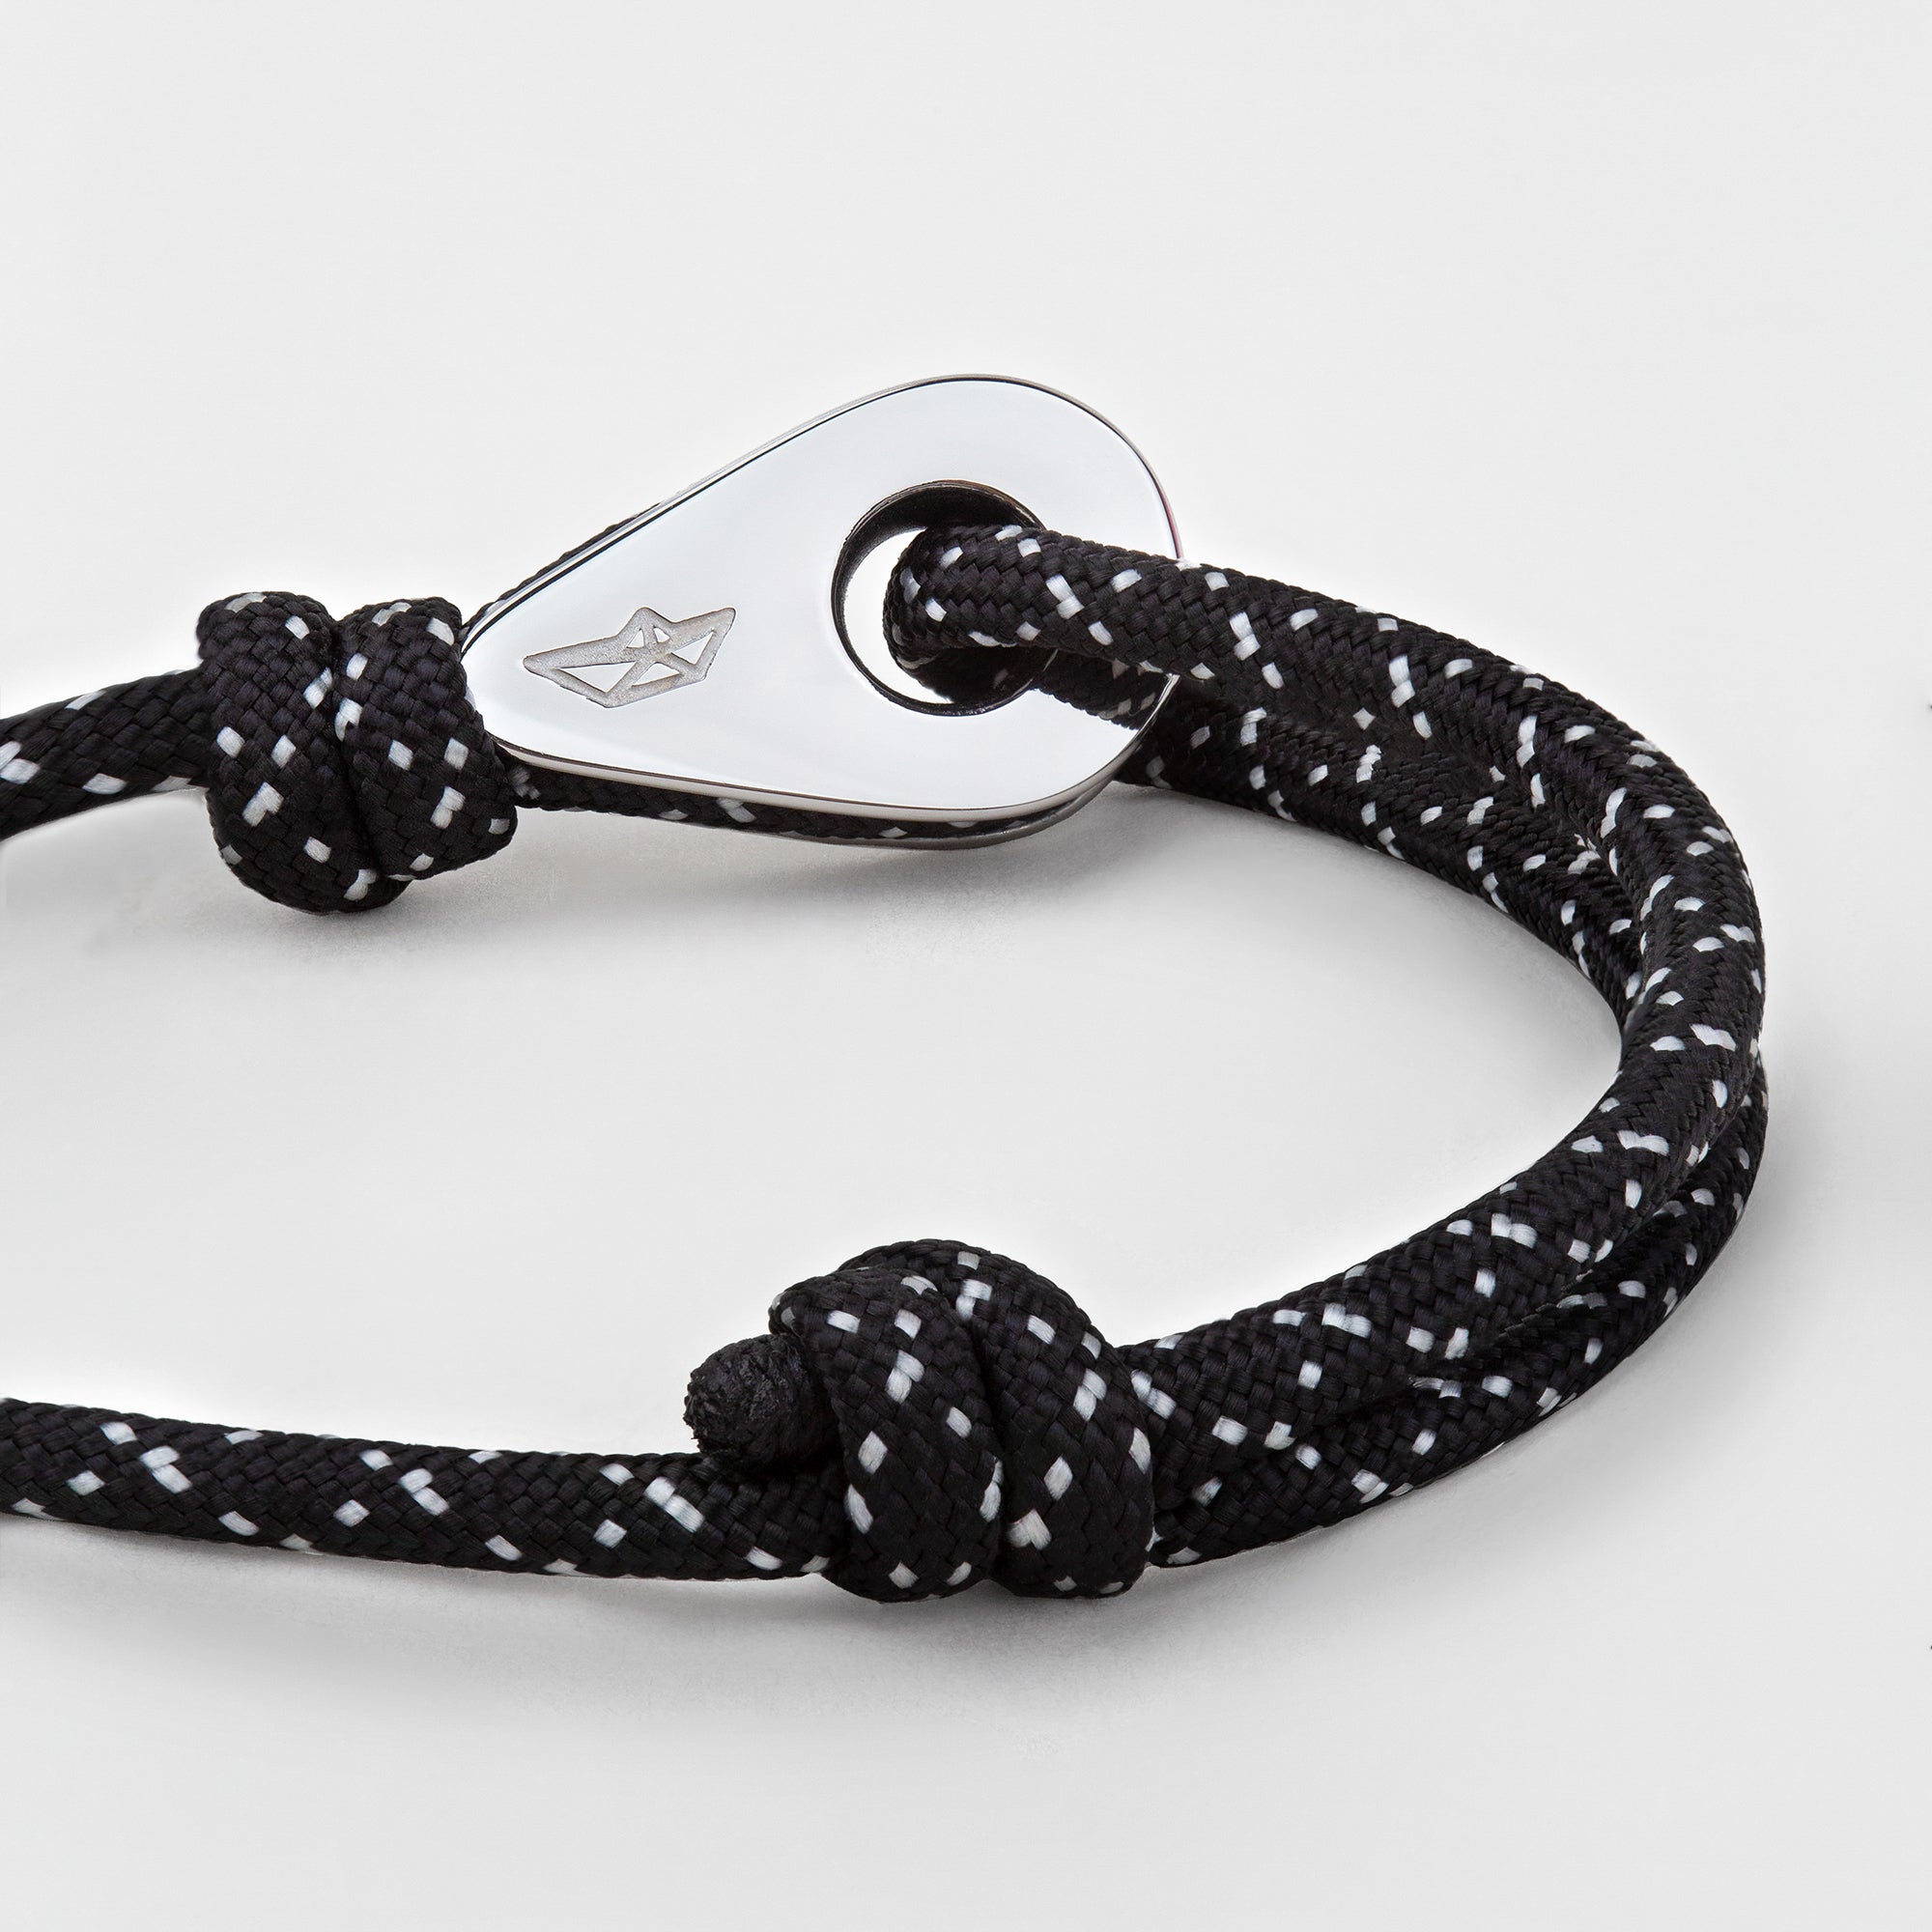 AMSTERDAM Mens Womens Fathom – Bracelets Charm Paracord Wristbands Rope Thimble Bracelets